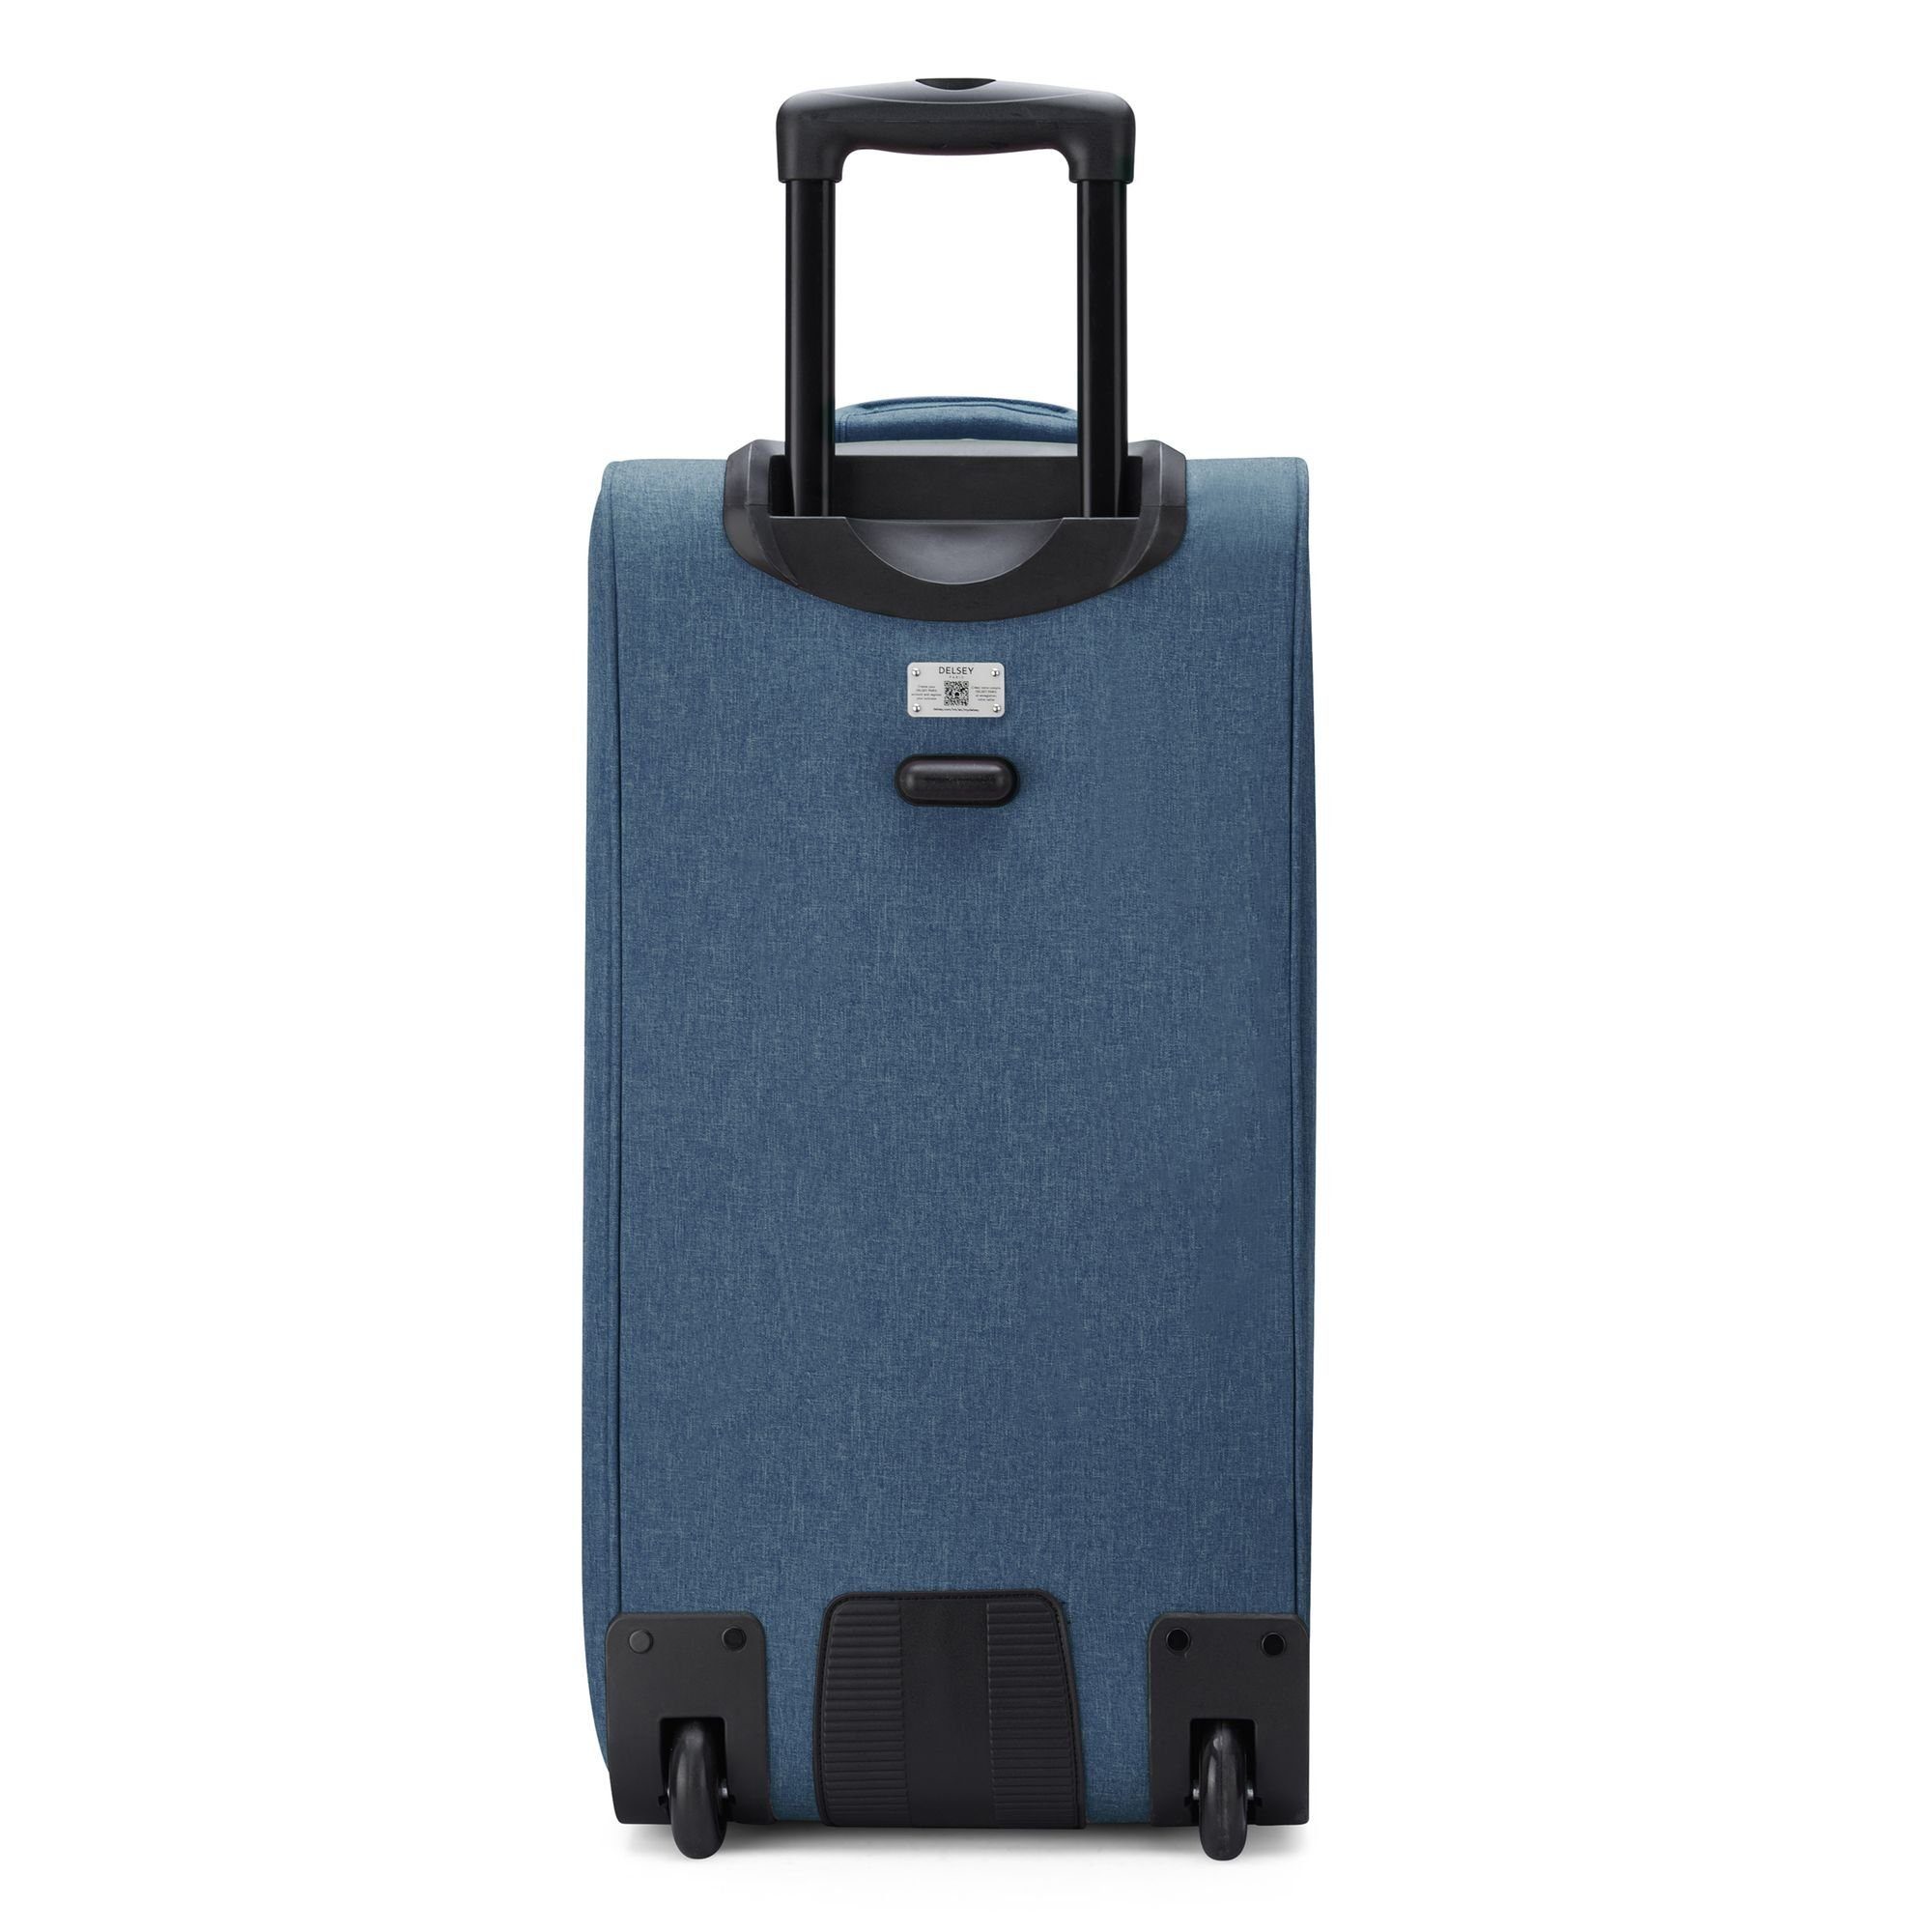 Reisetasche Maubert Delsey blau 2.0, Polyester